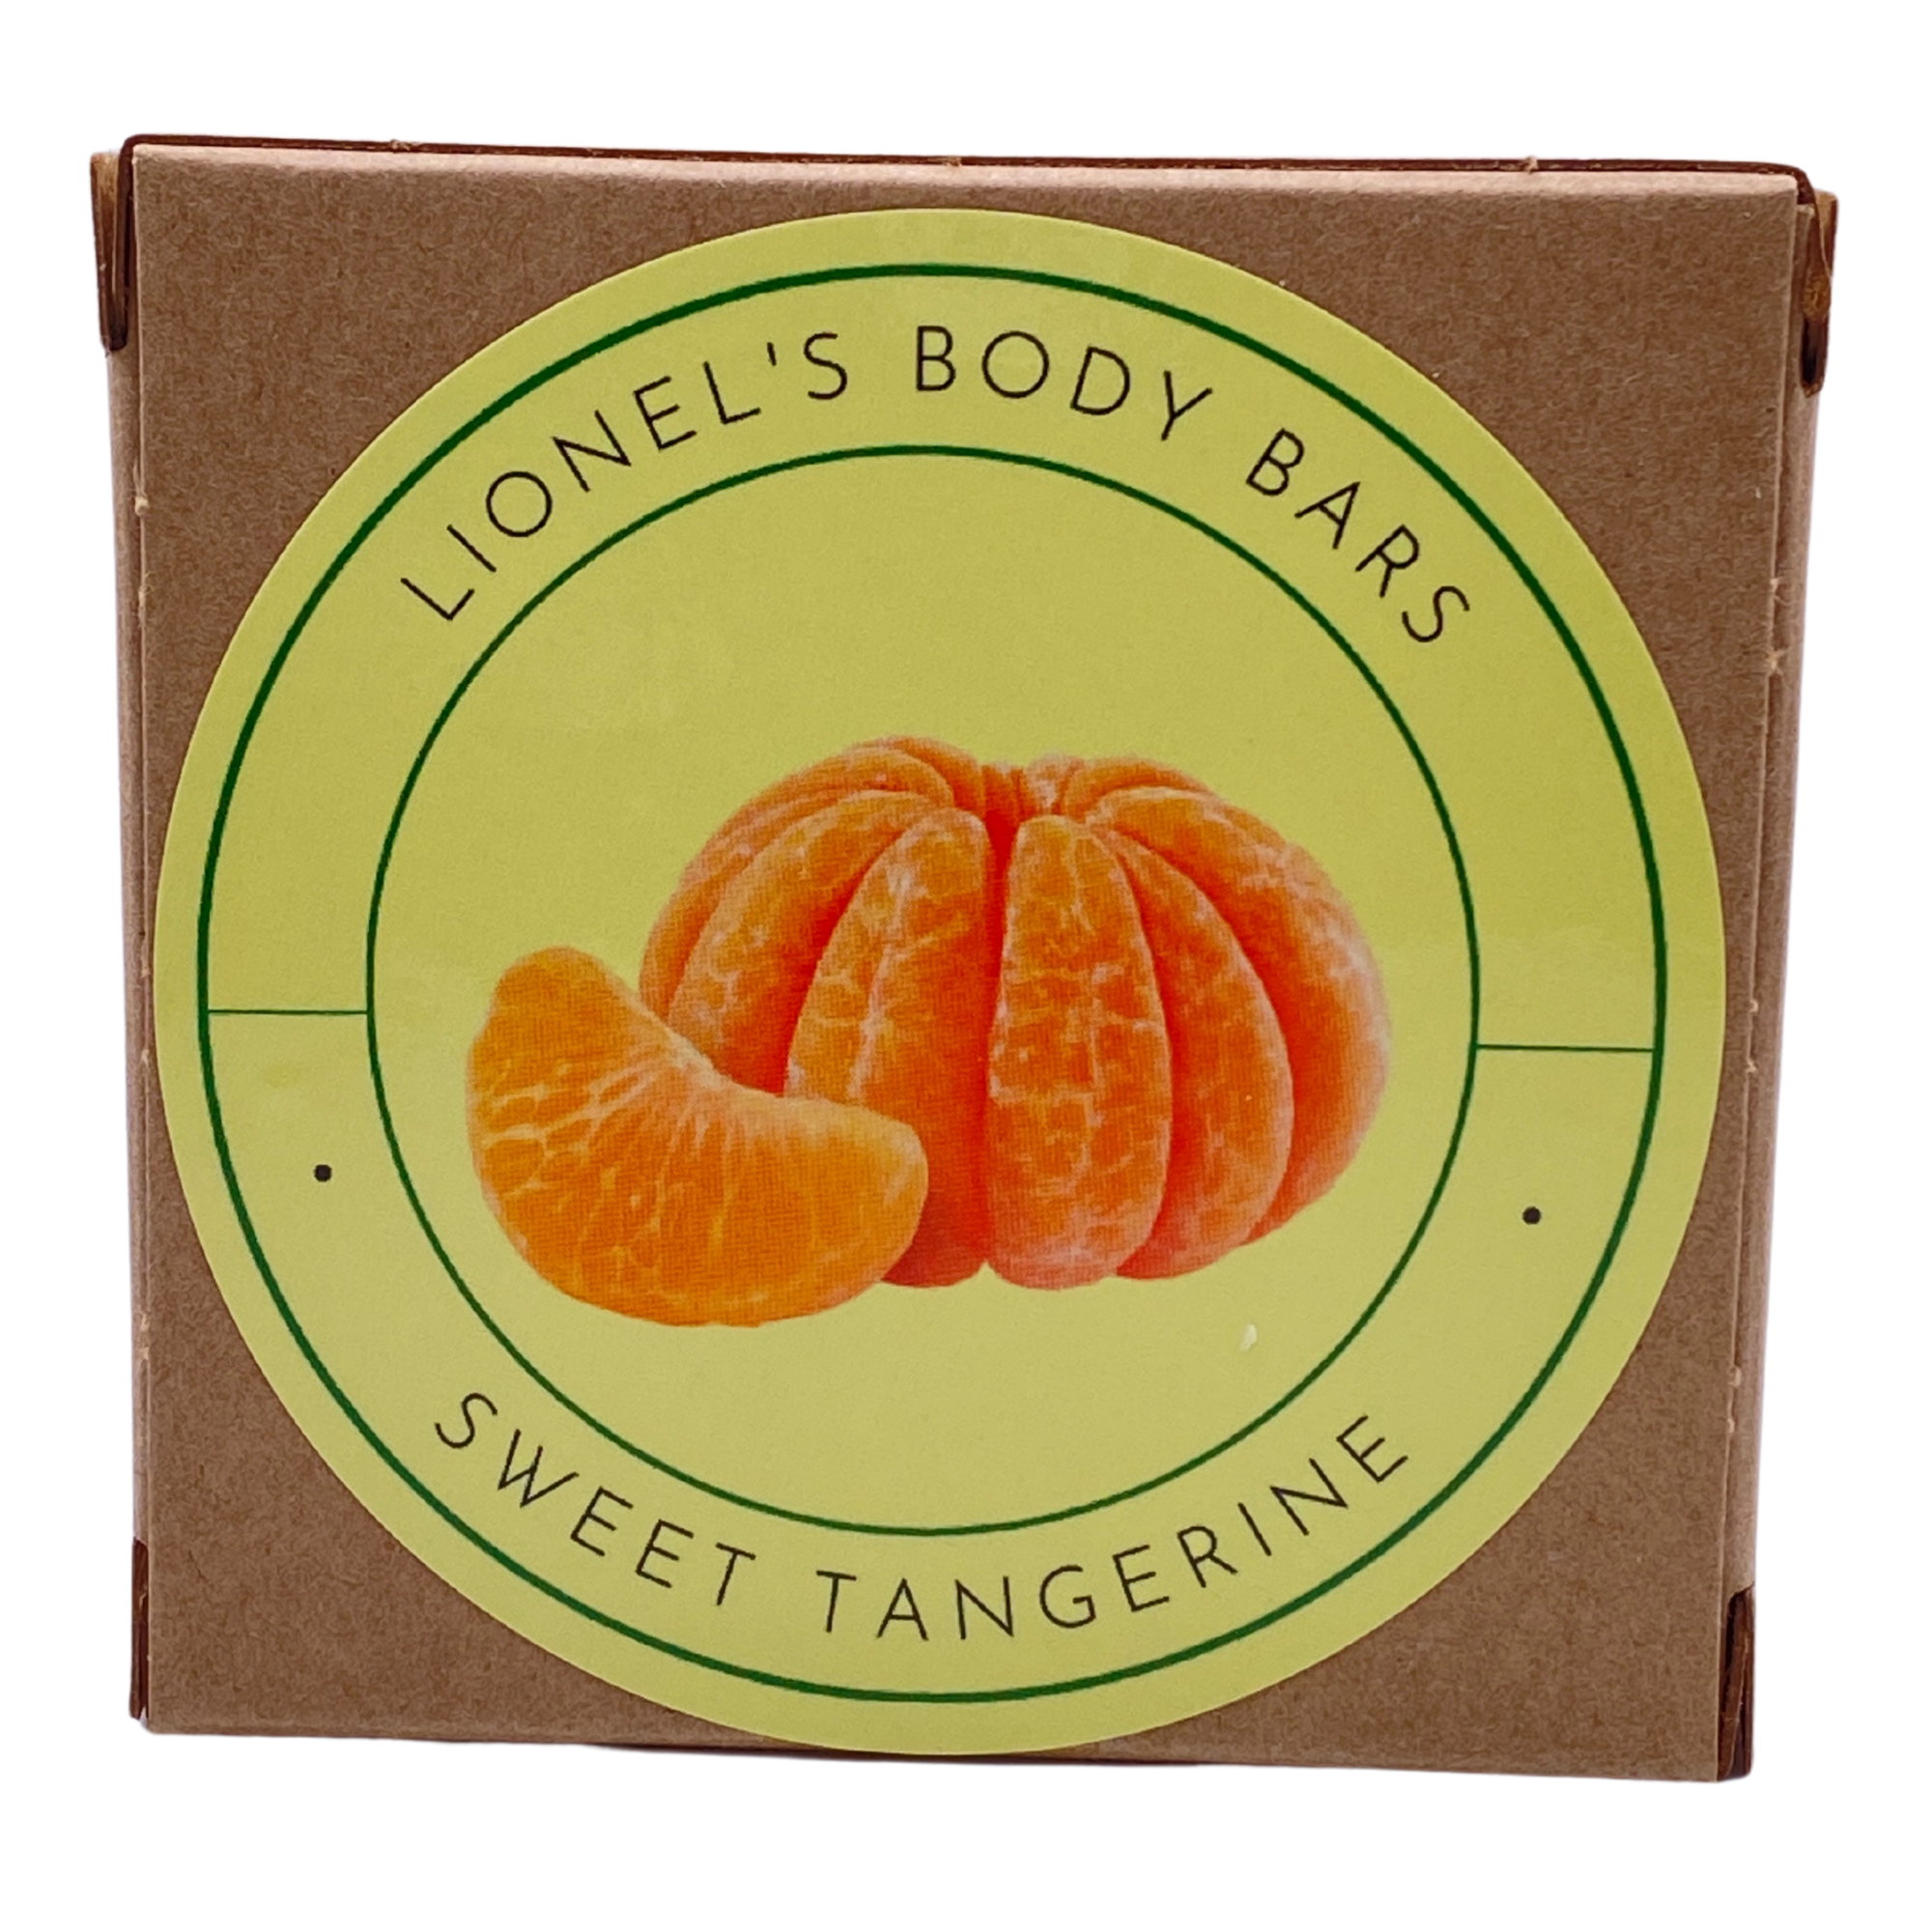 Sweet Tangerine Body Bar